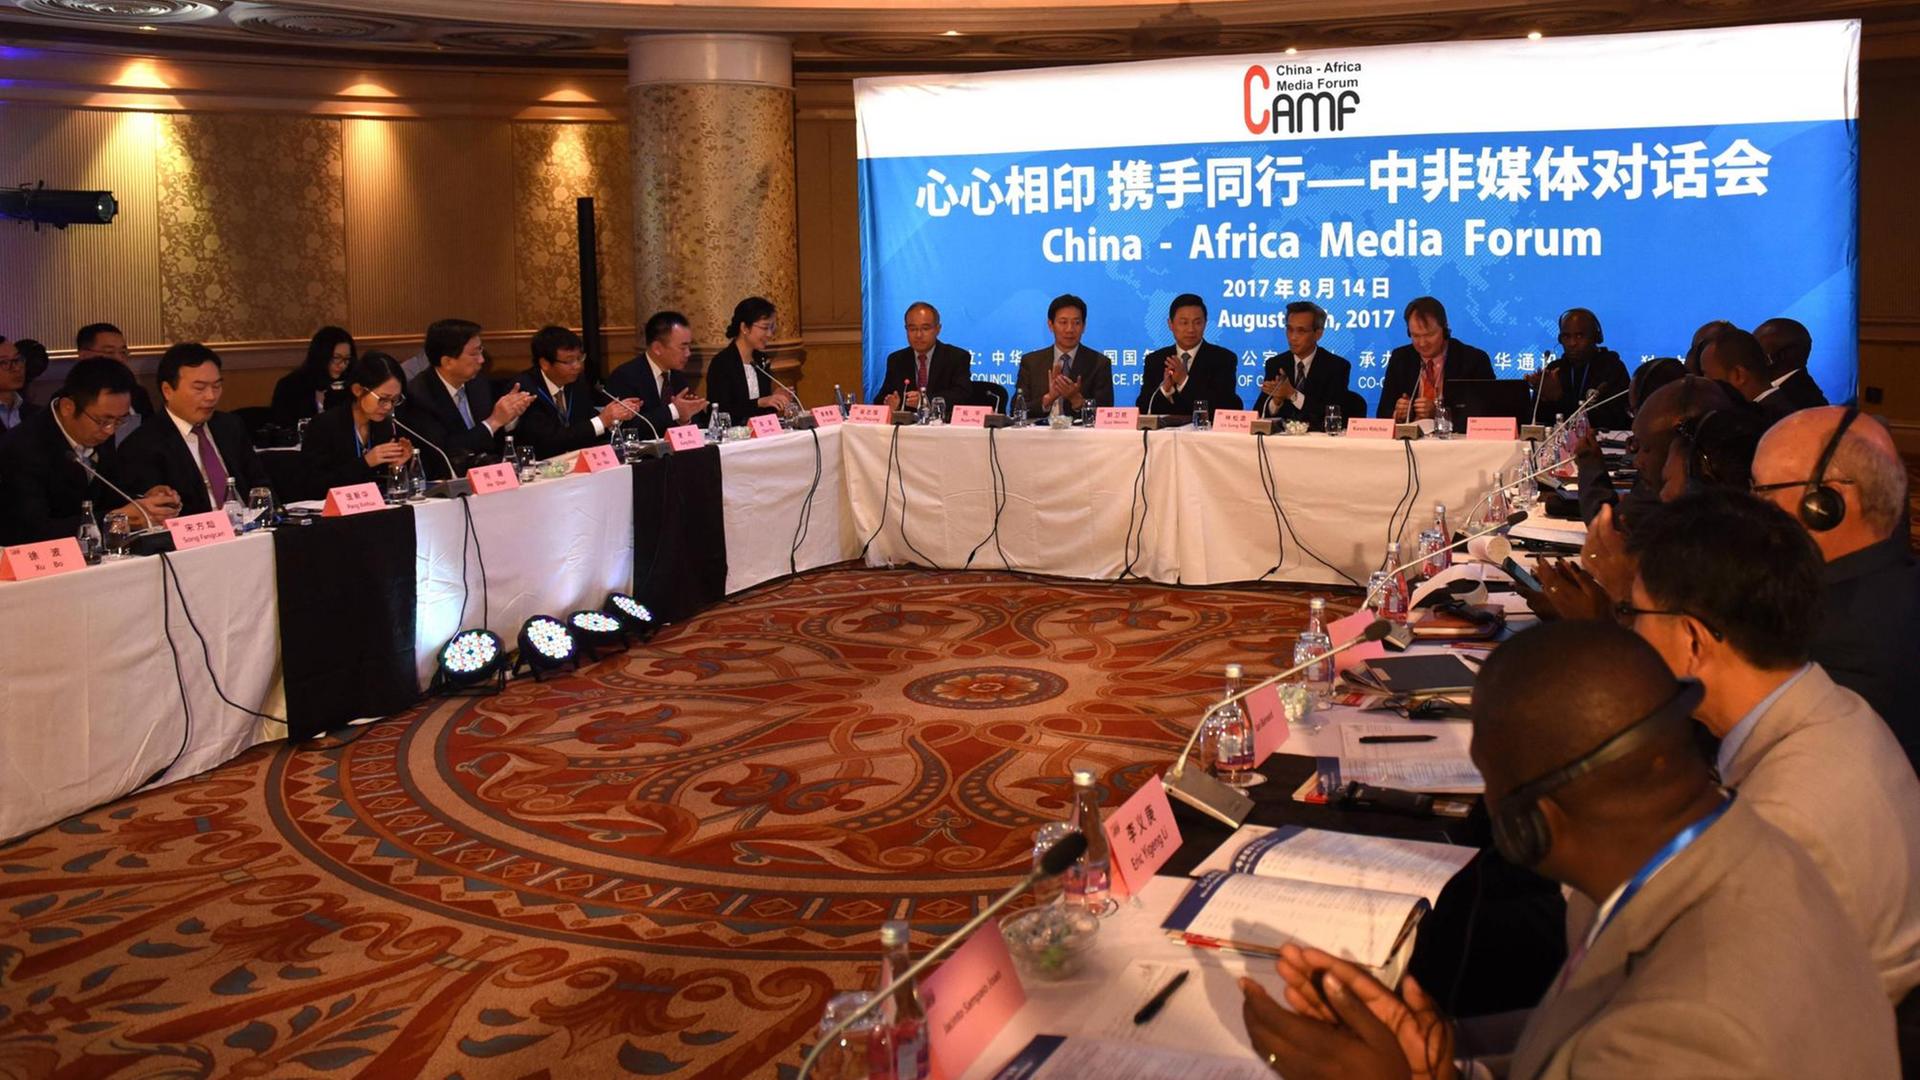 Blick in den Sitzungssaal beim "China Africa Media Forum".